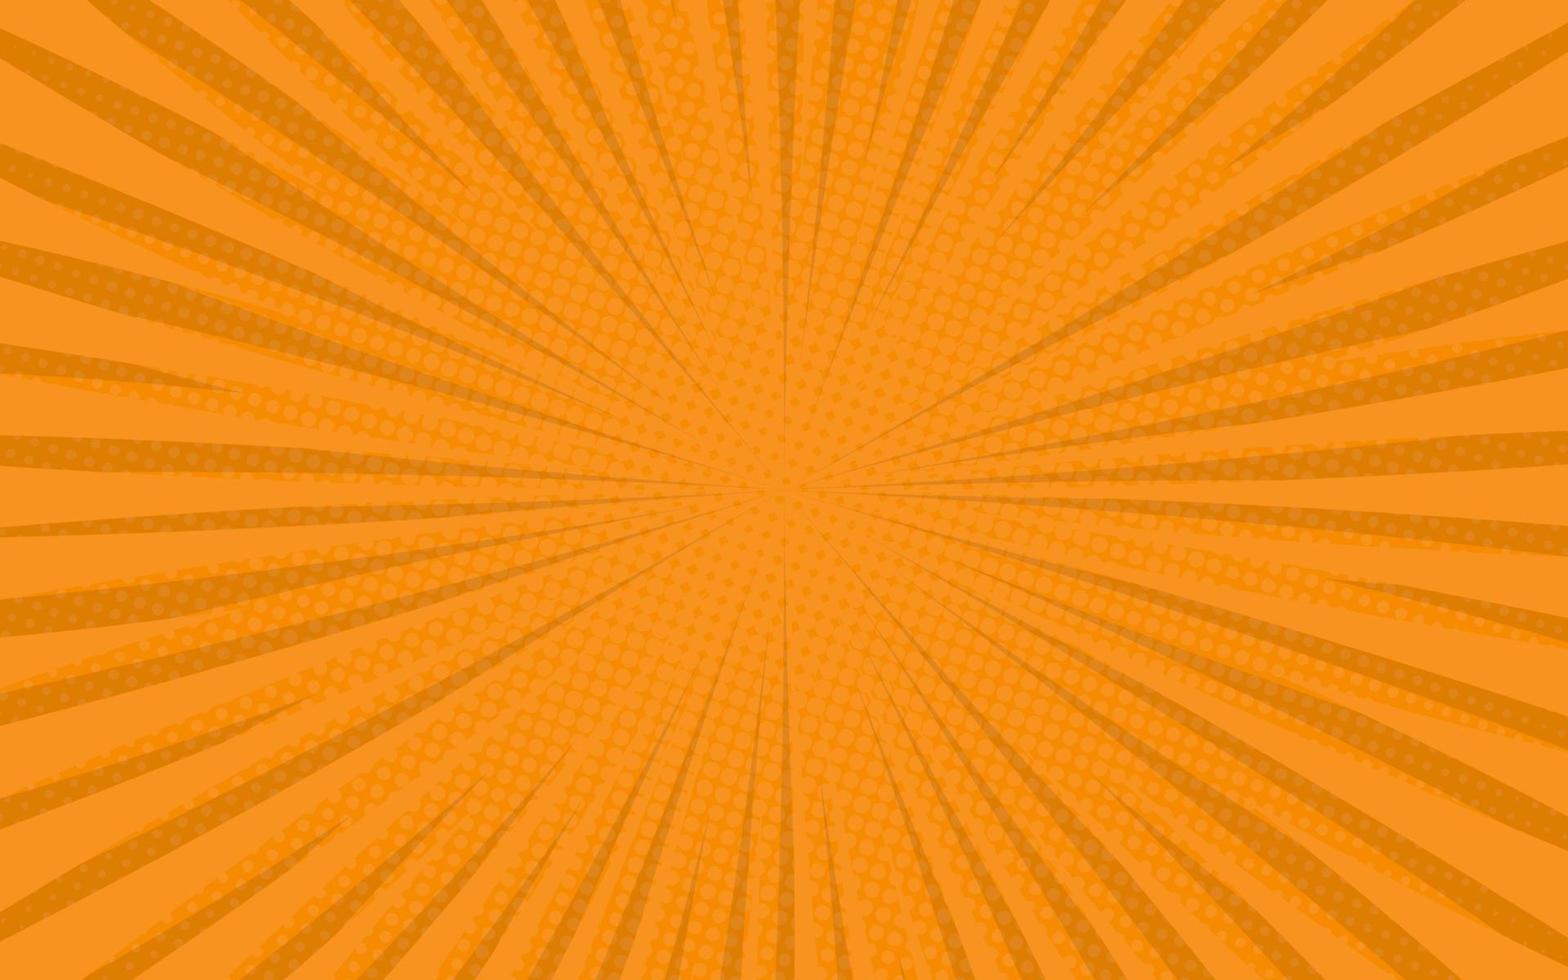 Sun rays retro vintage style on orange background. Comic pattern with starburst and halftone. Cartoon retro sunburst effect with dots. Summer banner vector illustration